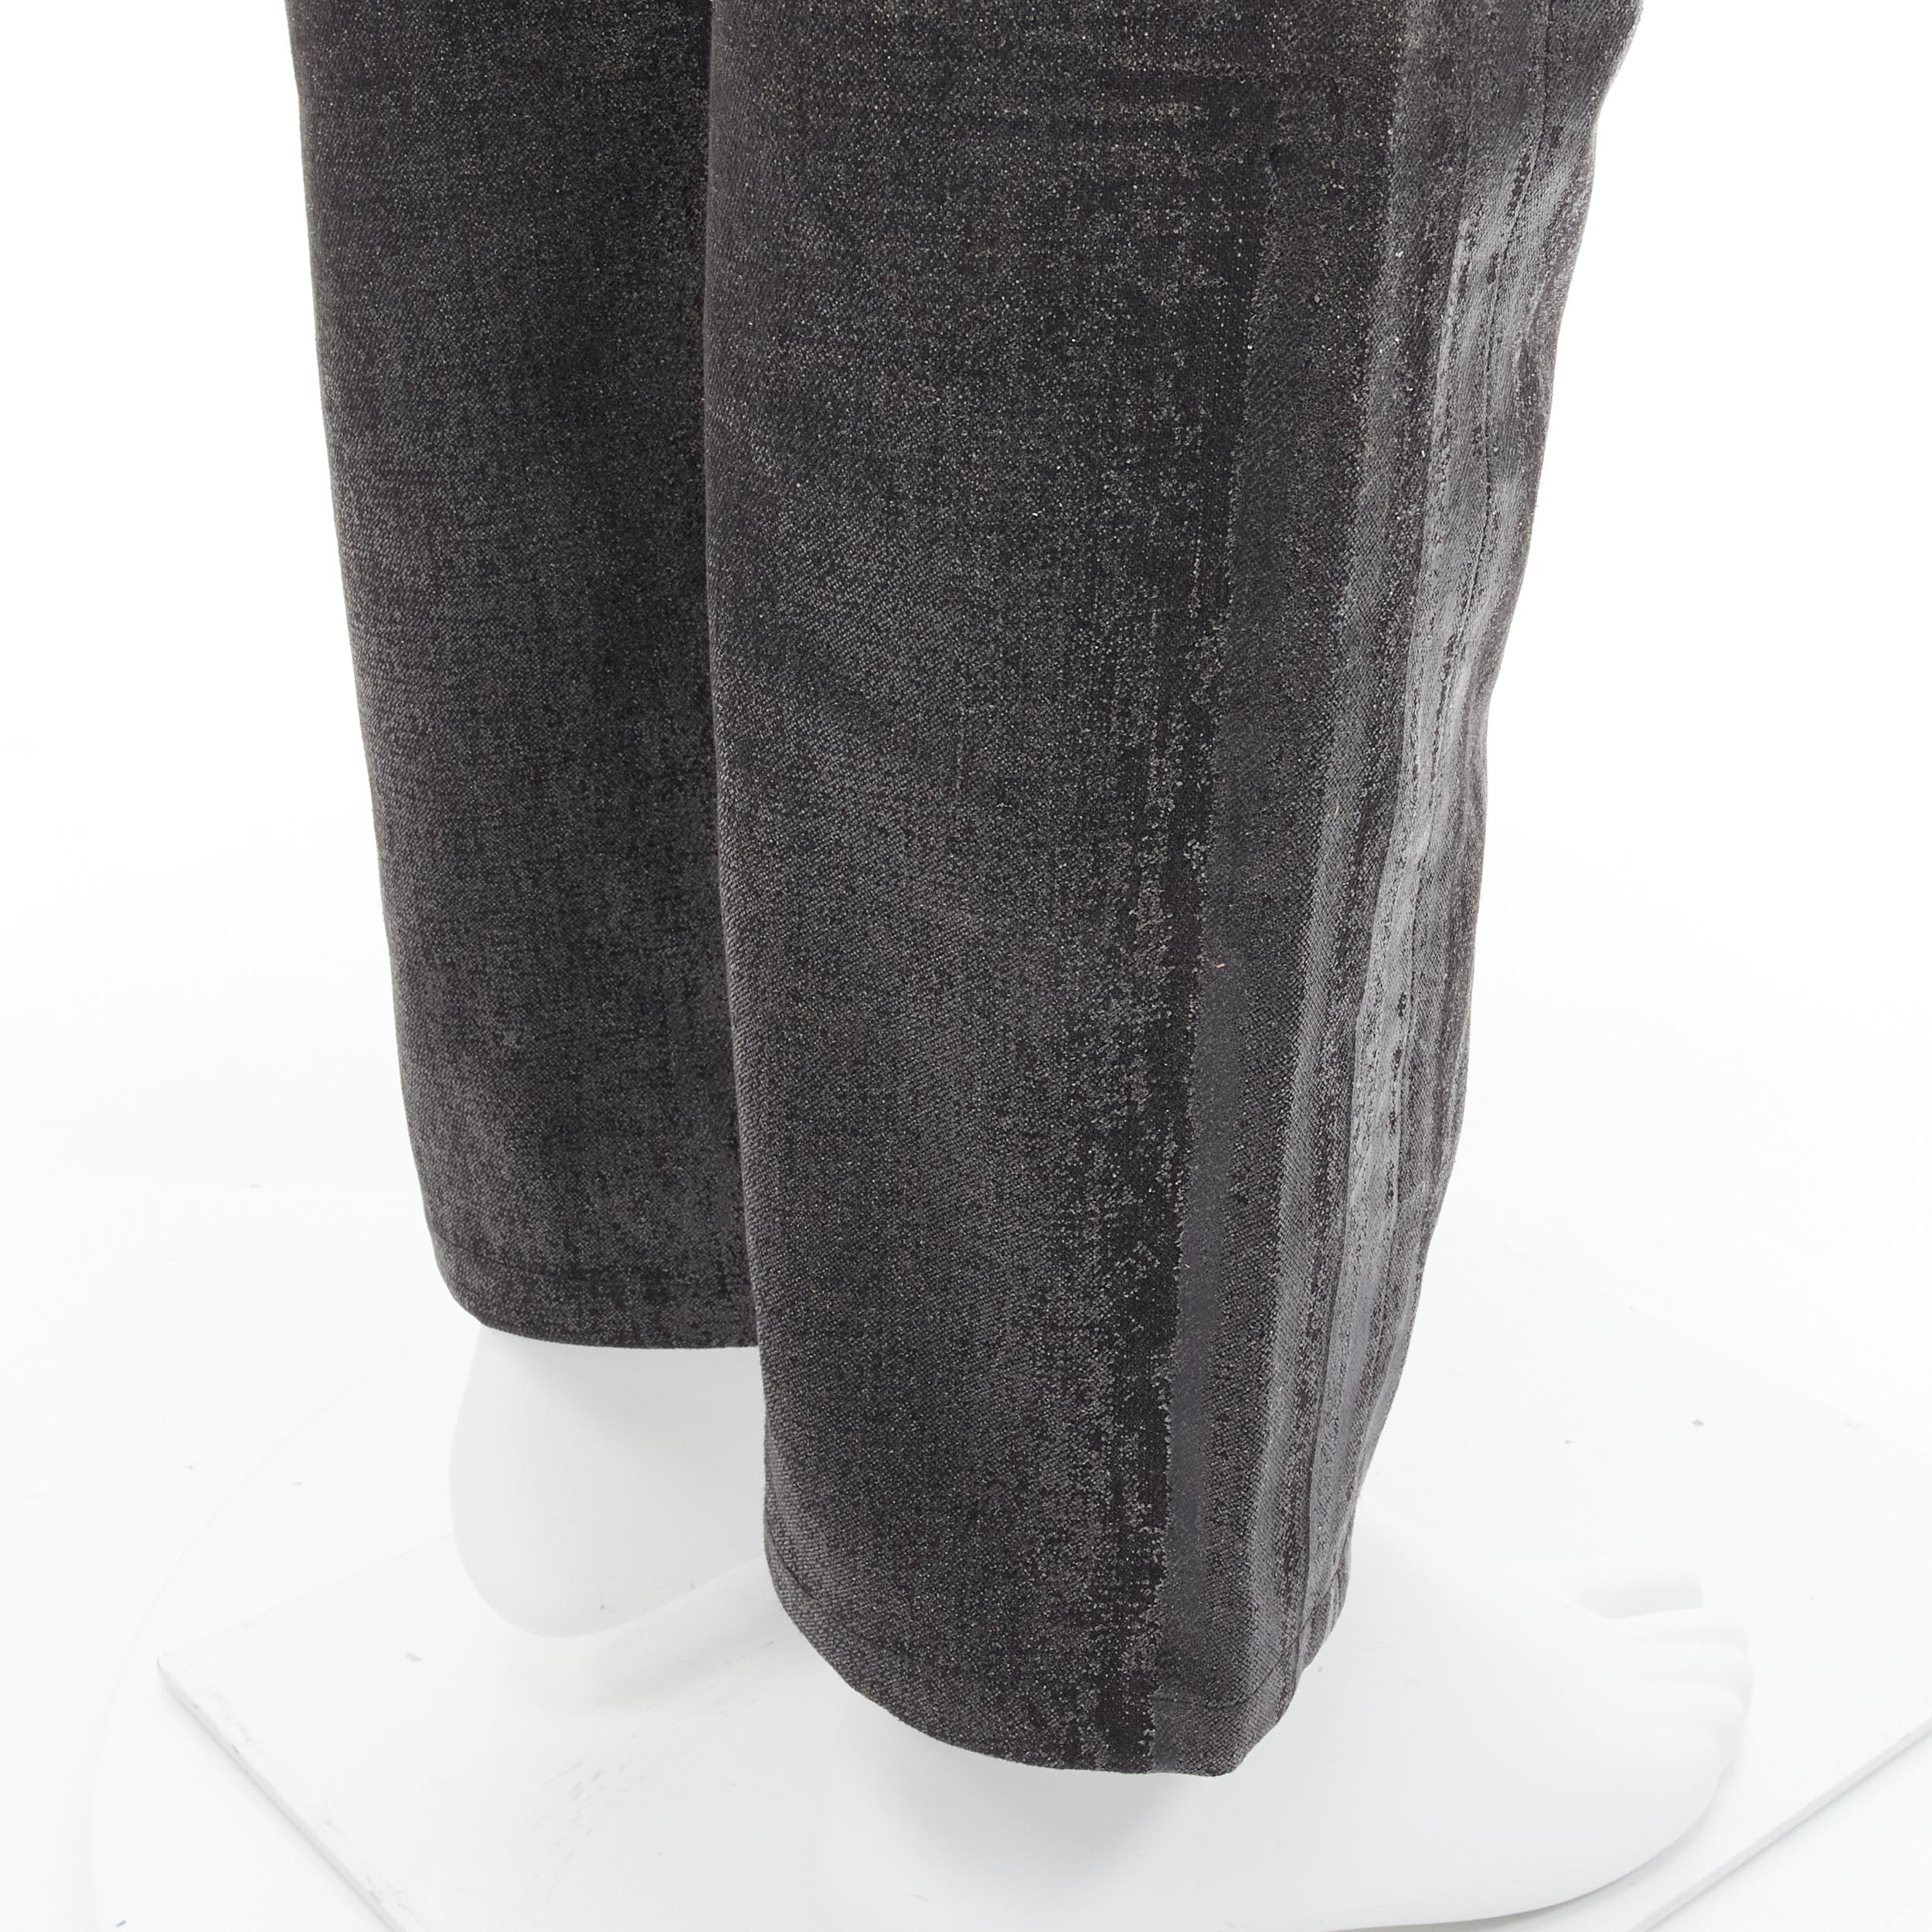 Men's DIOR HOMME Hedi Slimane black wax coated  claw mark jeans 33